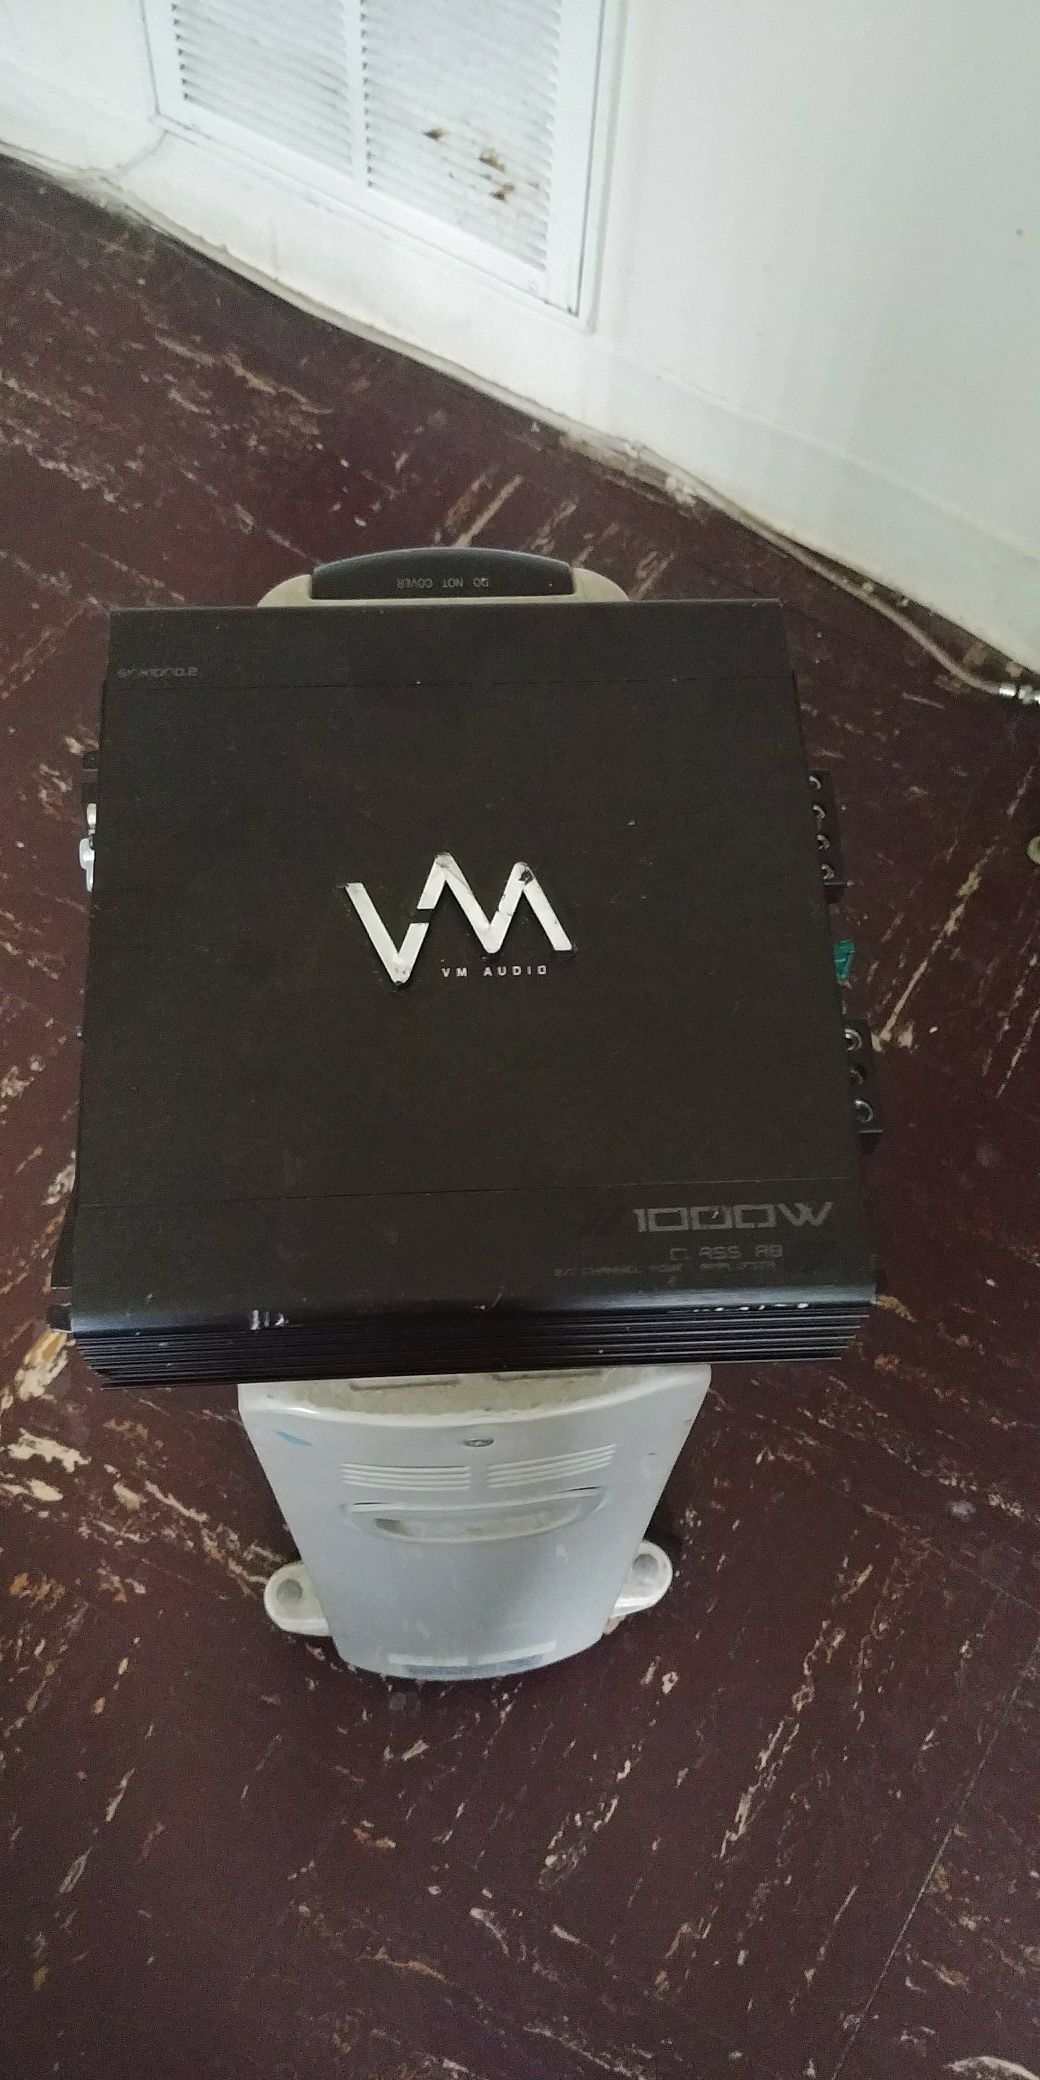 VM AUDIO 2/1 amplifier 1000 watts